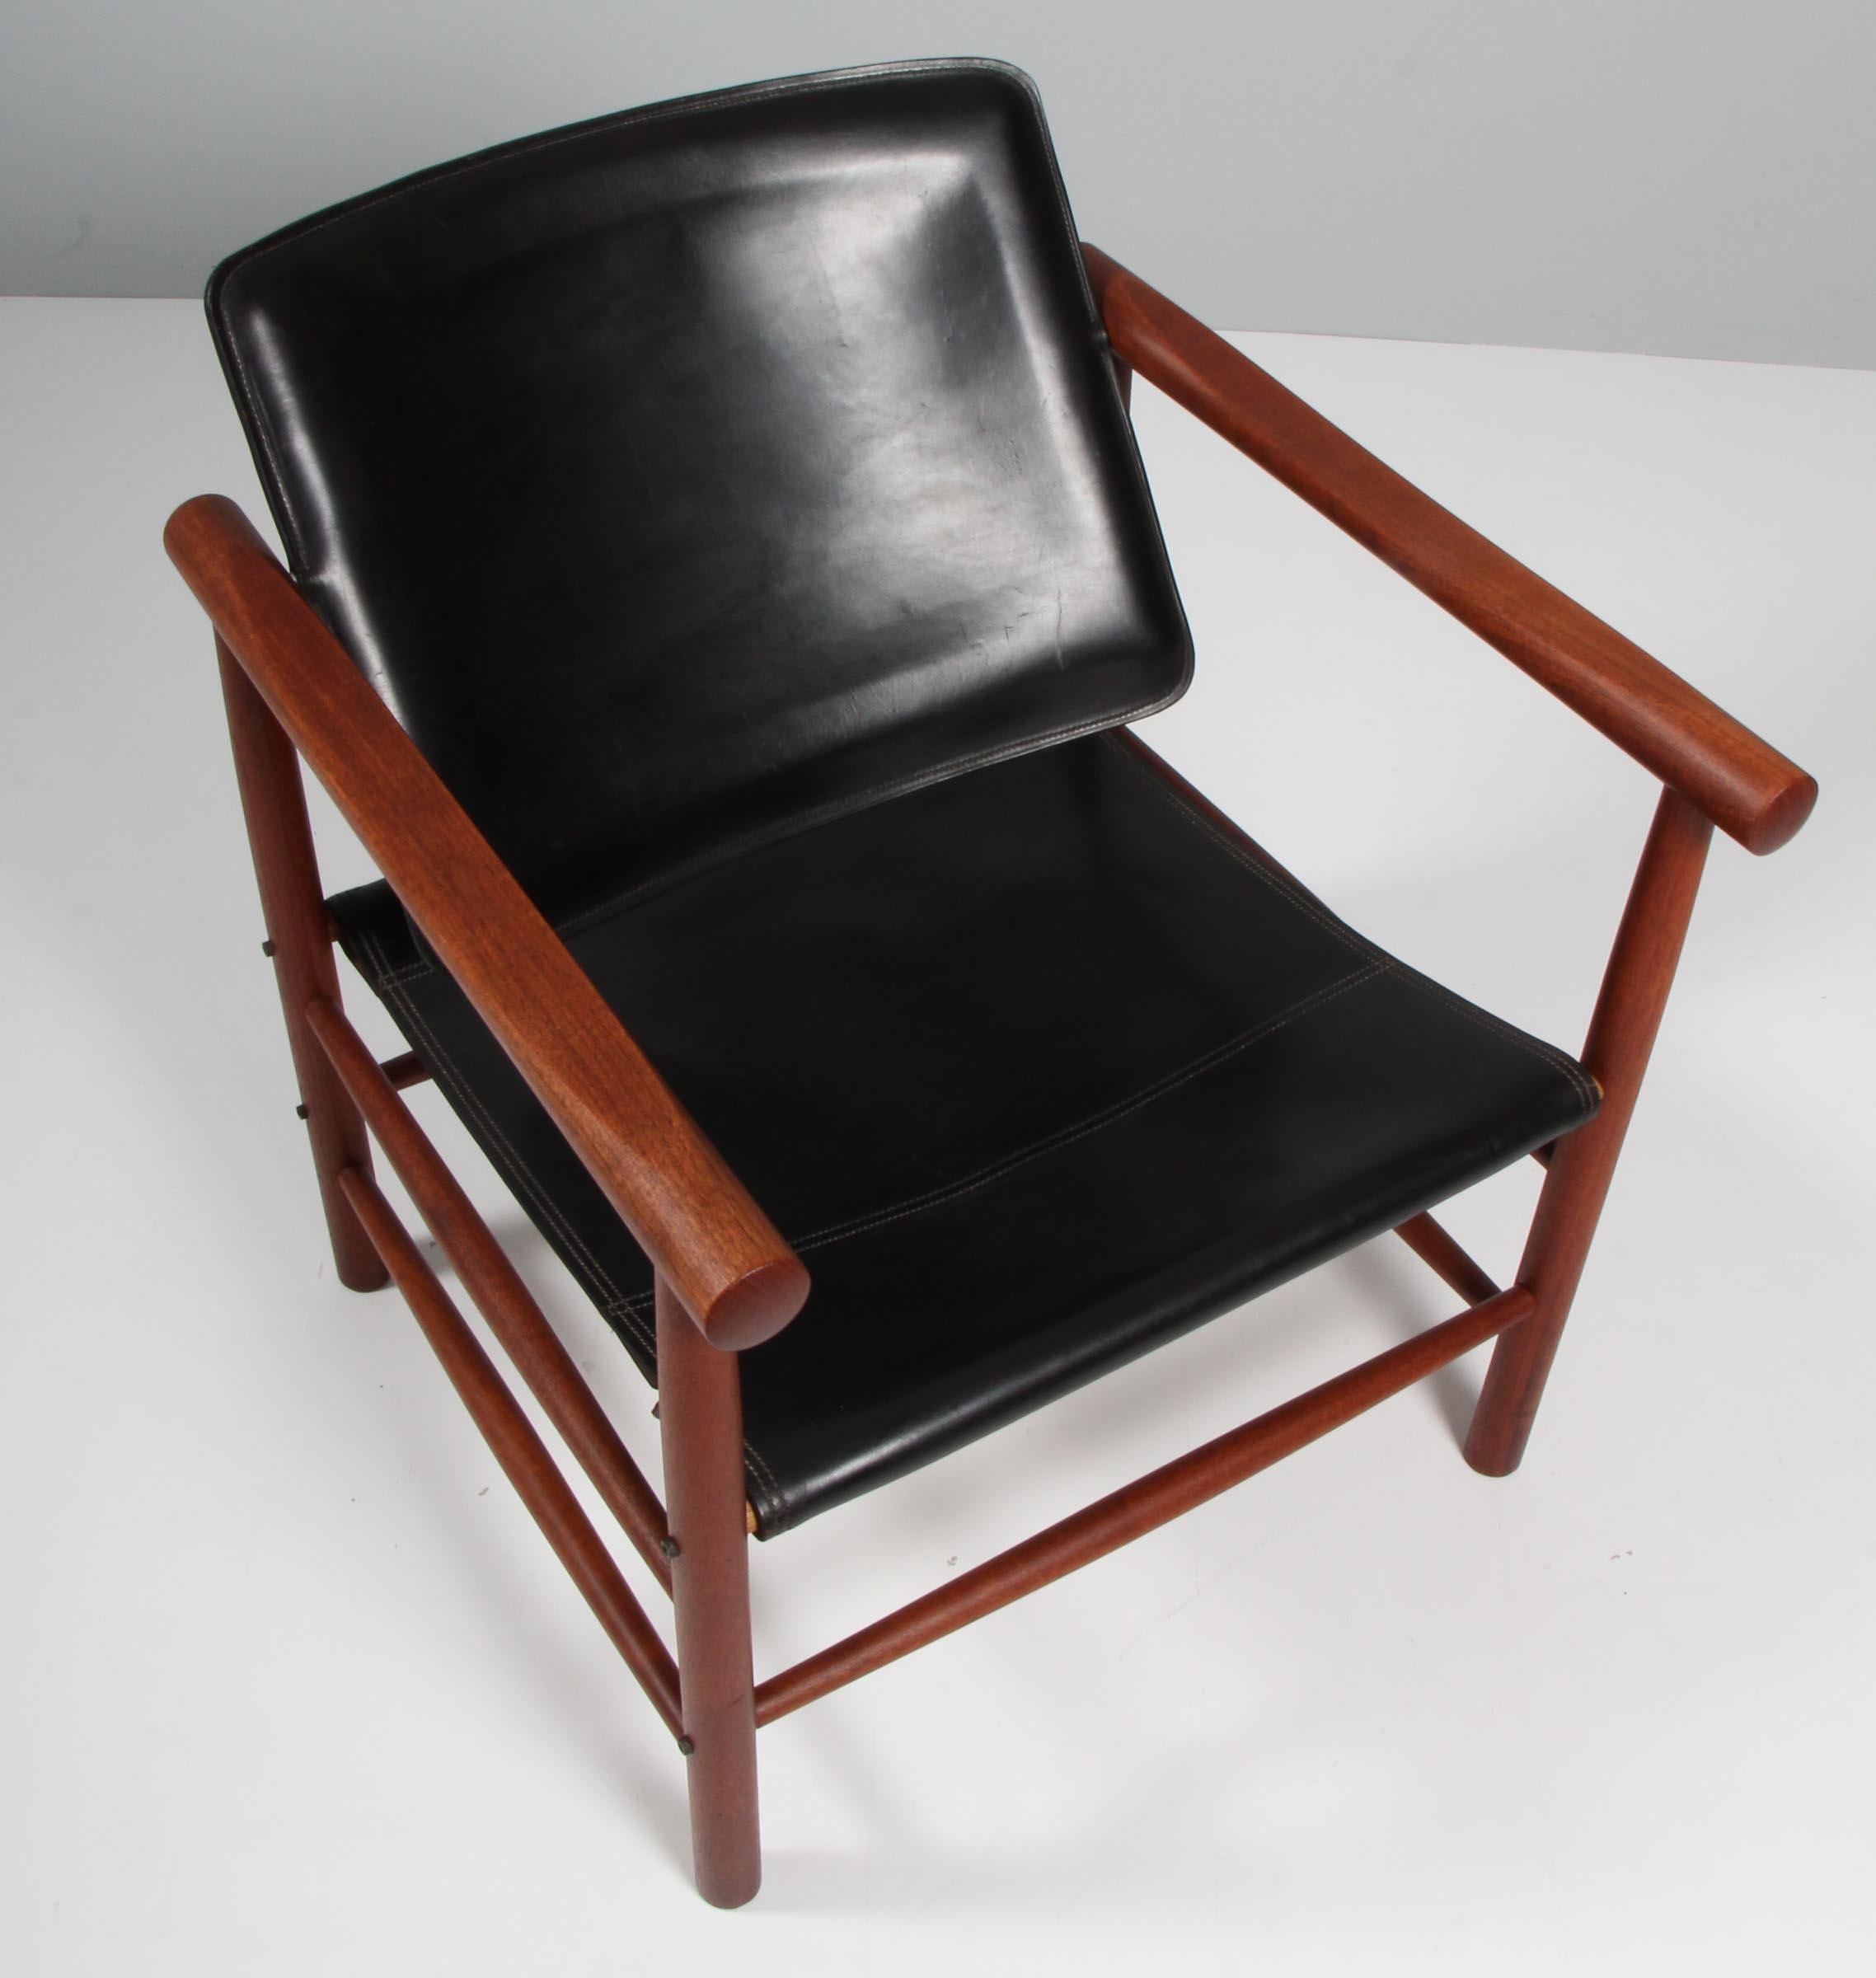 Kai Lyngfeldt Larsen lounge chair in solid tea.

Original upholstery of black saddle leather.

Model 506, made by Søborg Møbler.